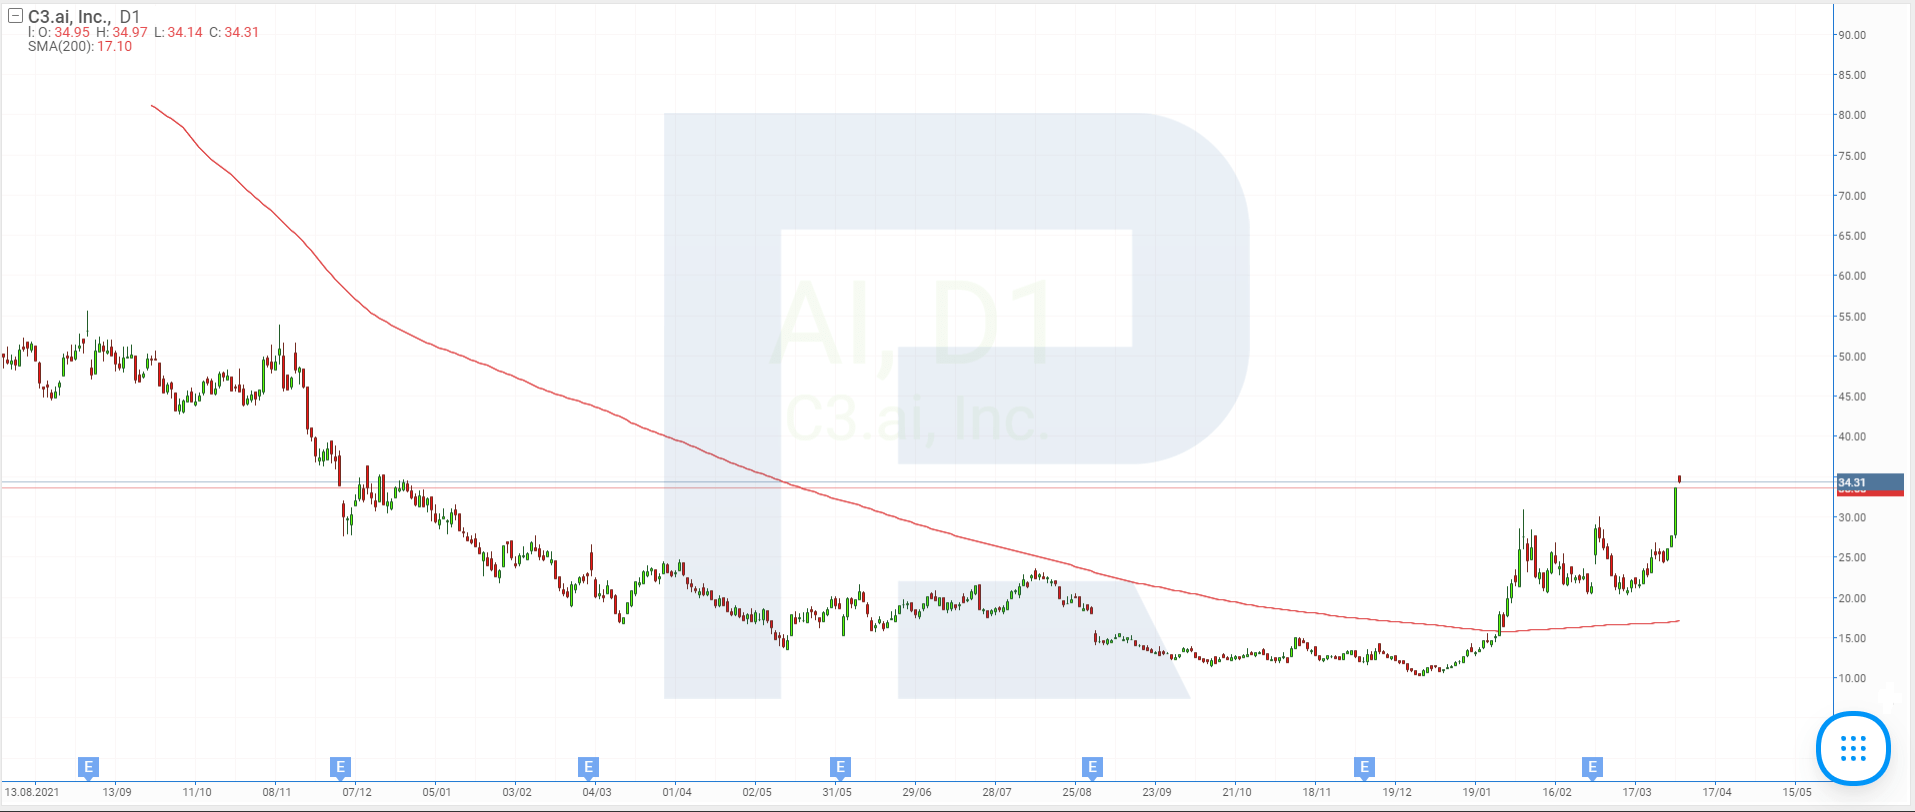 Stock price charts of C3.ai Inc.